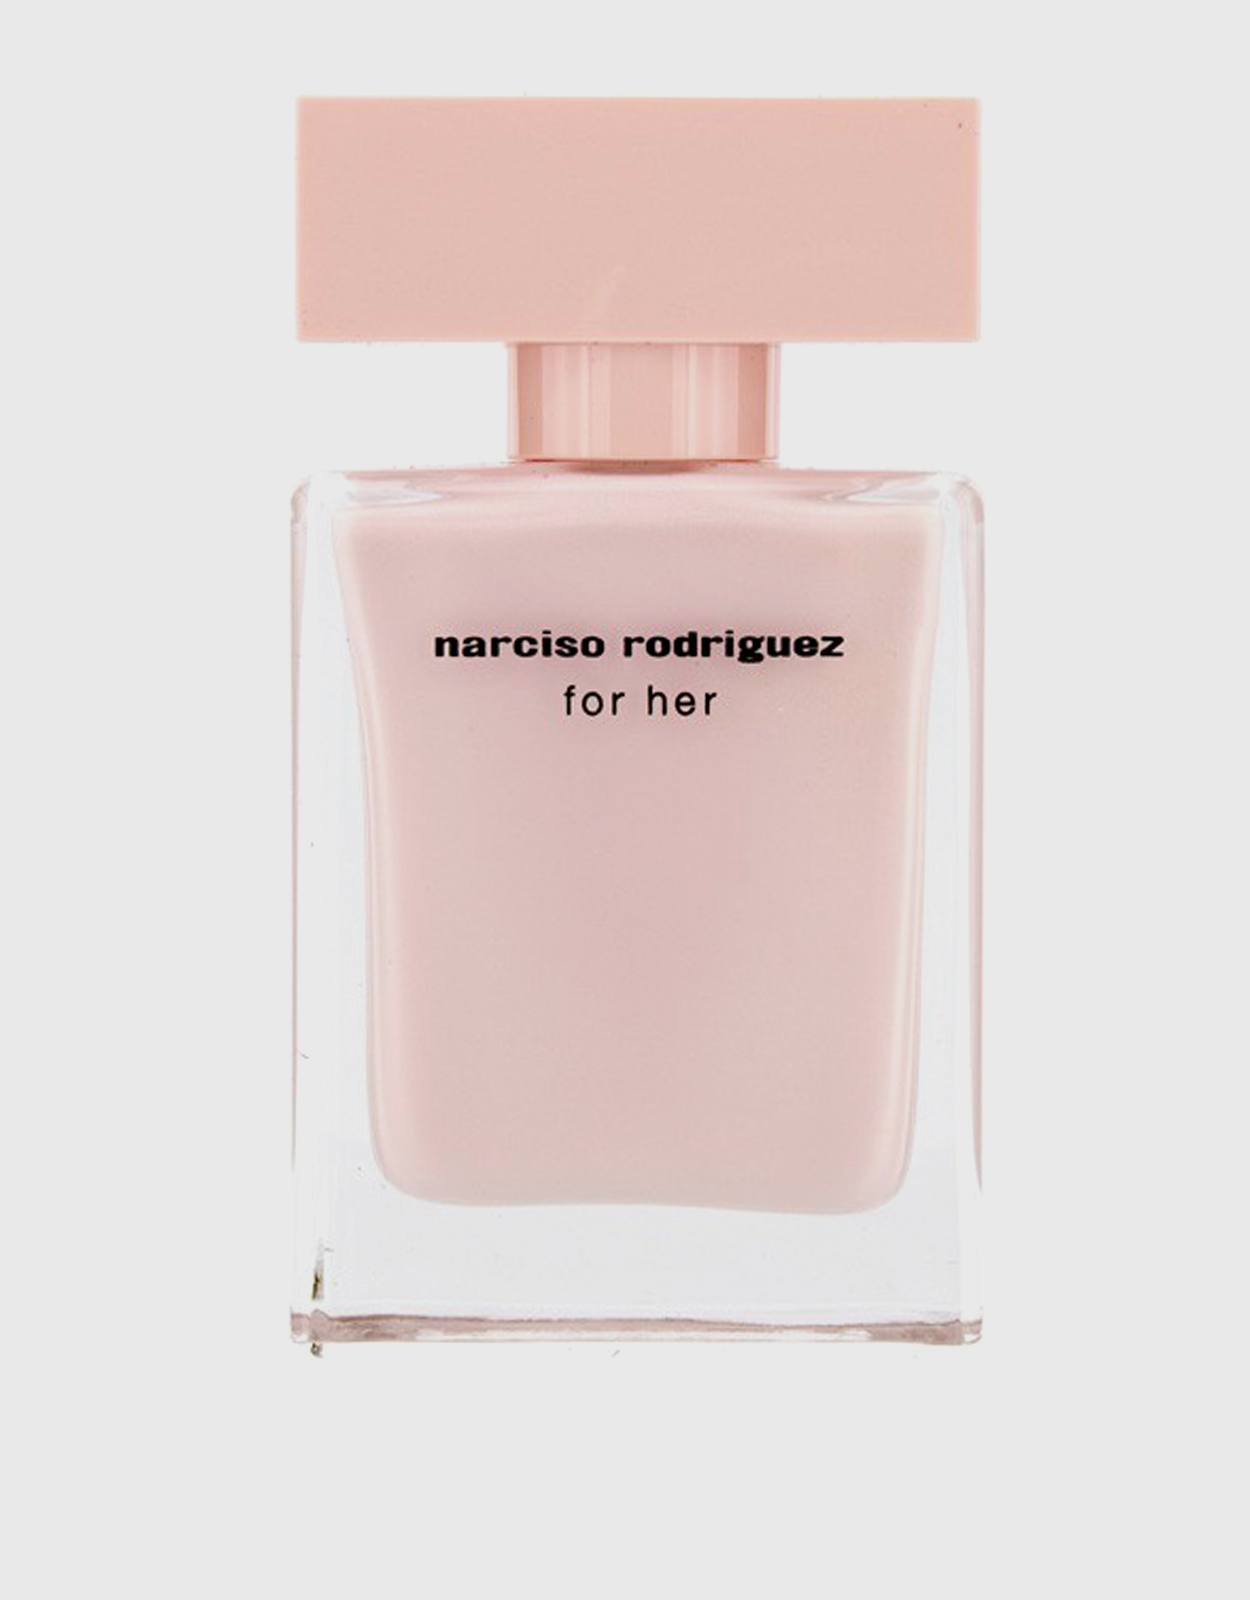 Slepen Plateau Oom of meneer Narciso Rodriguez For Her Eau De Parfum 30ml (Fragrance,Women) IFCHIC.COM